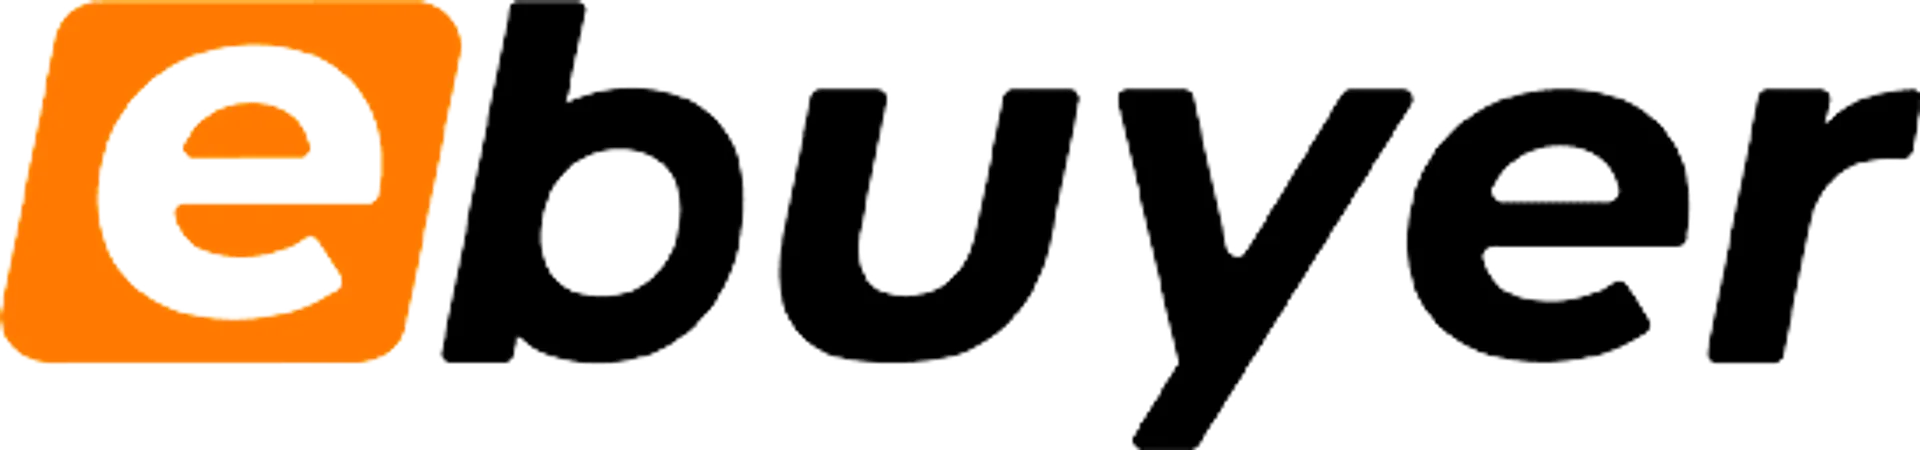 EBUYER logo